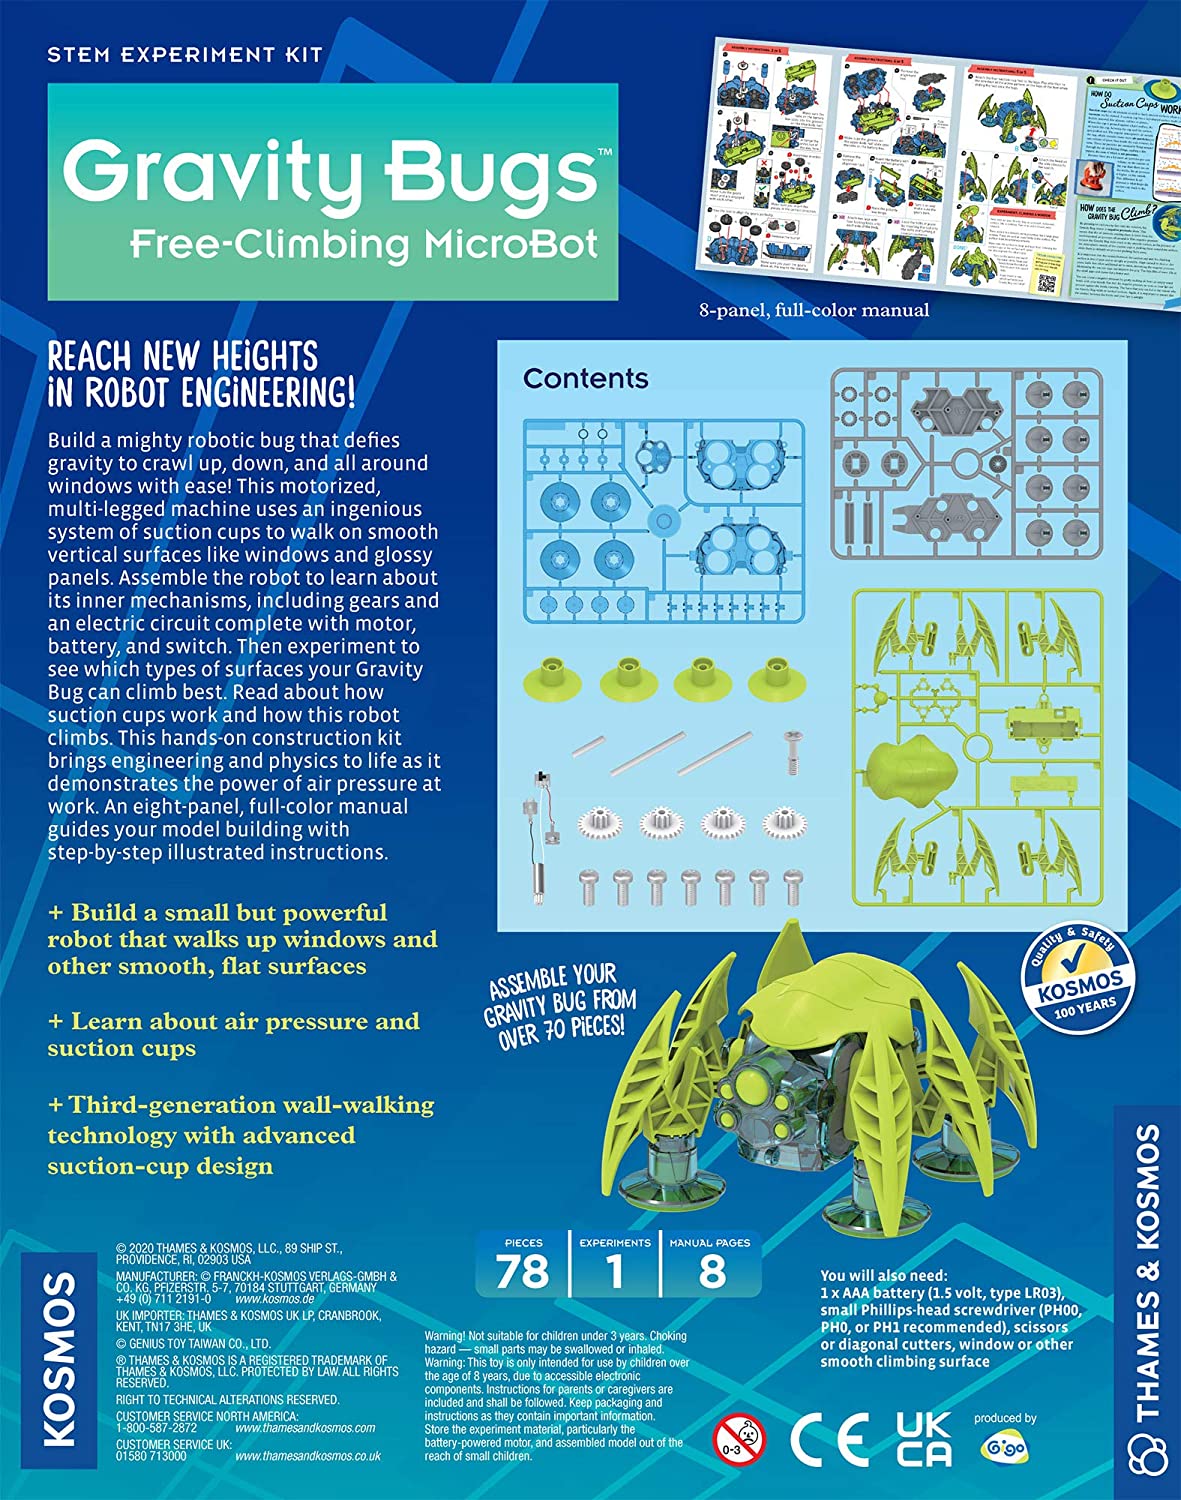 Gravity Bugs Free-Climbing MicrBot by Thames & Kosmos #550034